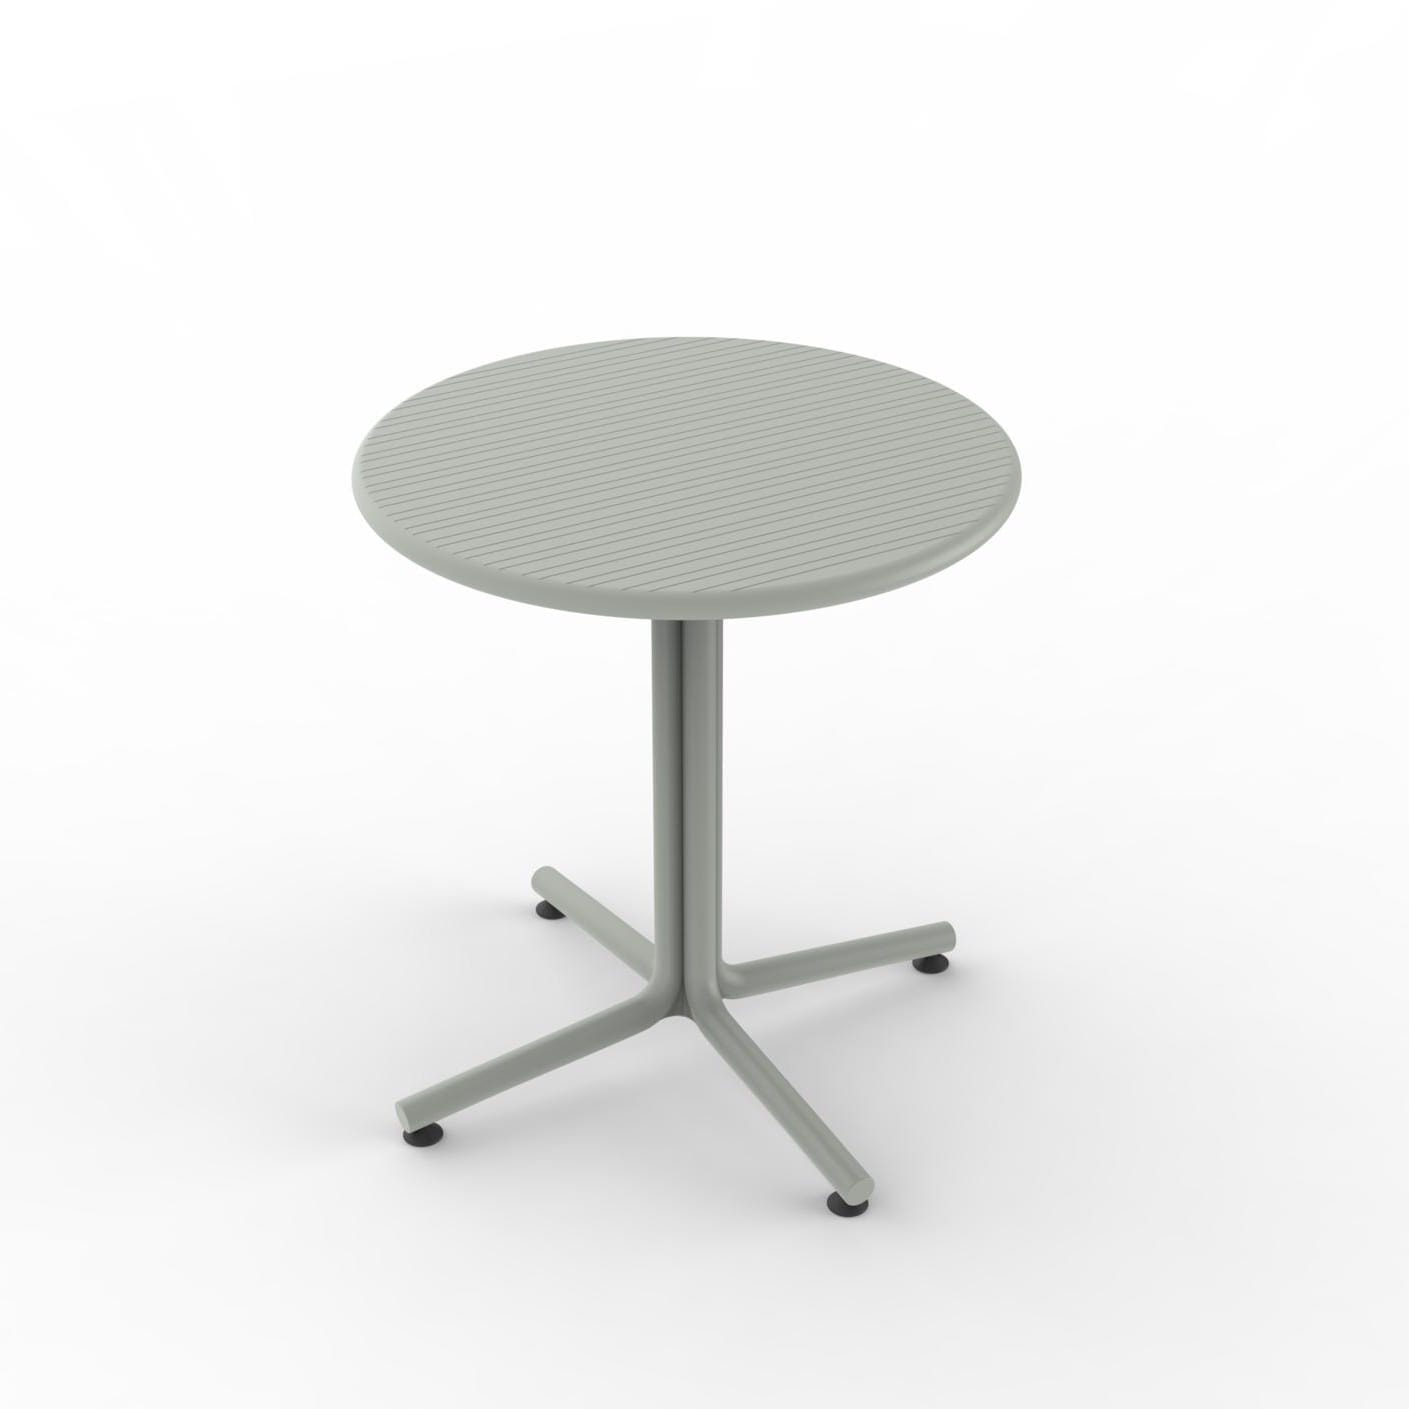 Resol bini round table inside, outside Ø70 greenish gray